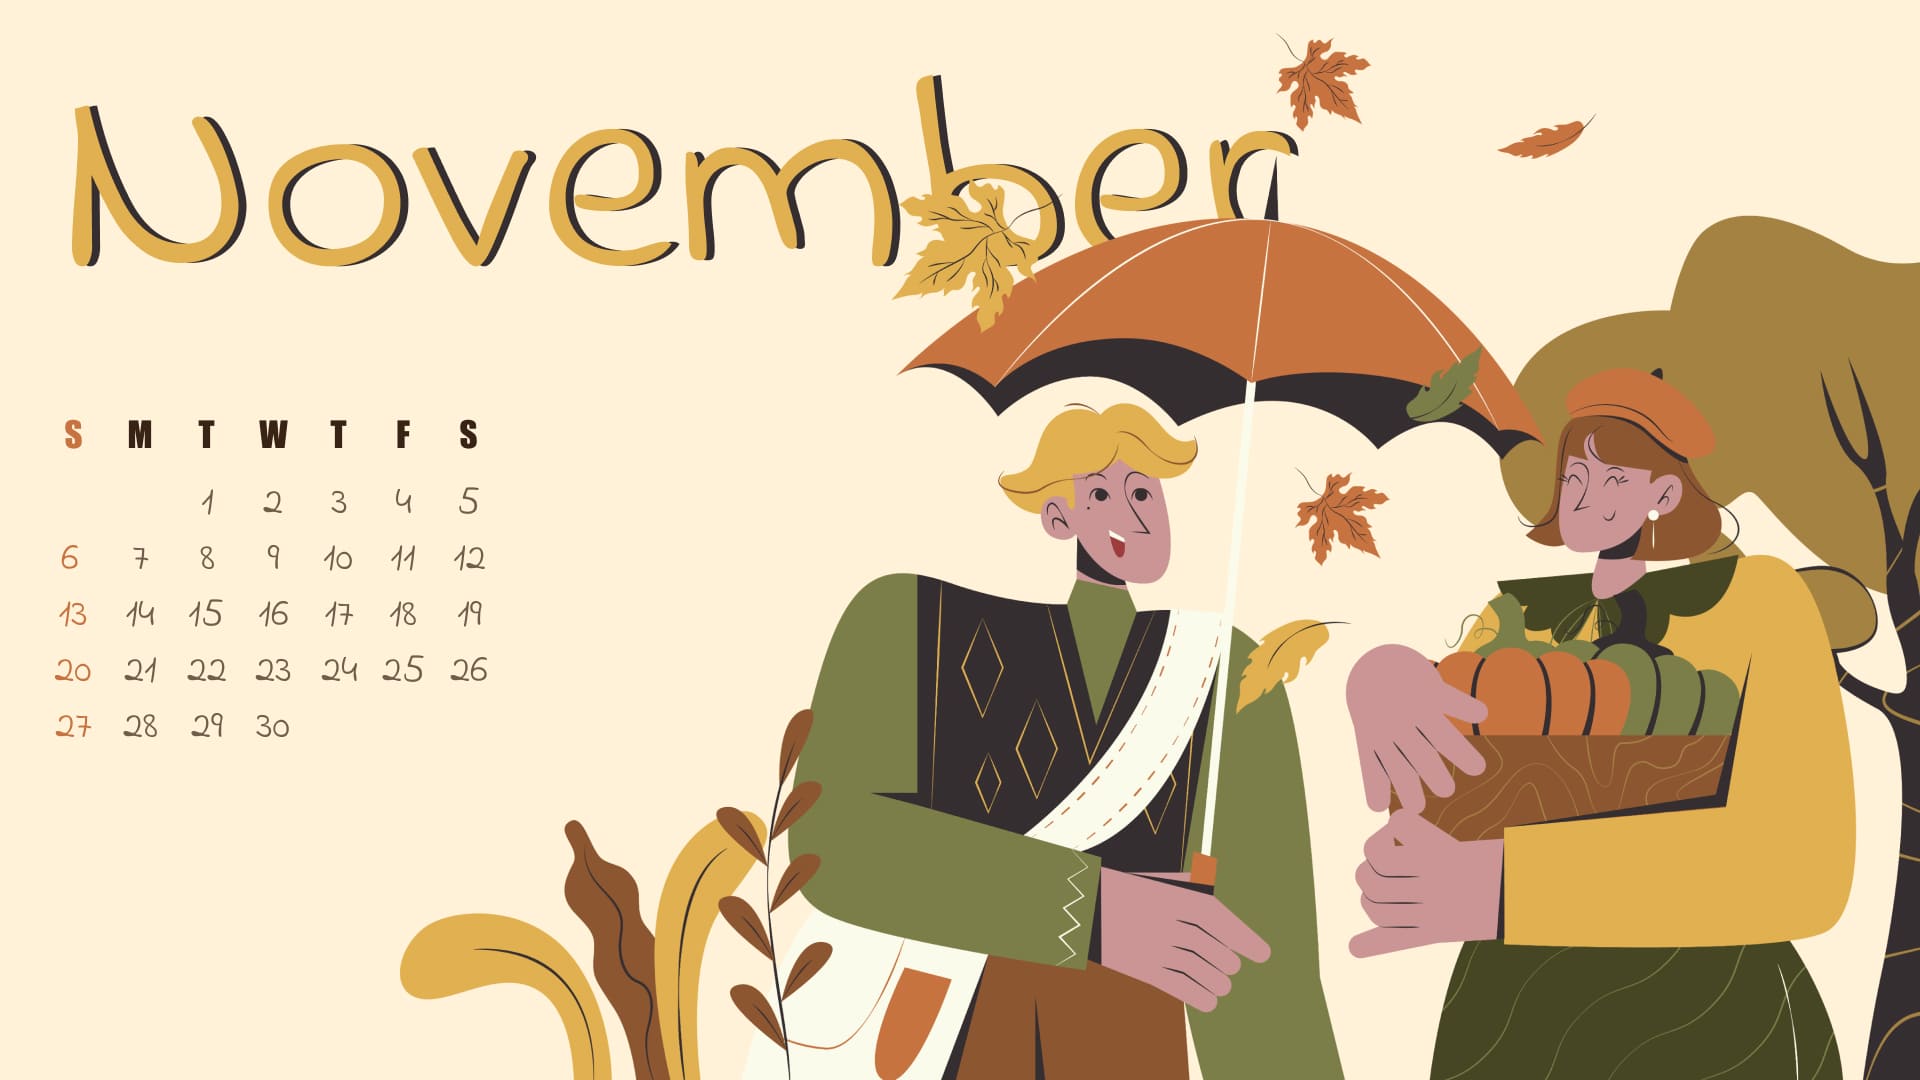 Free autumn November calendar, image size 1920x1080.